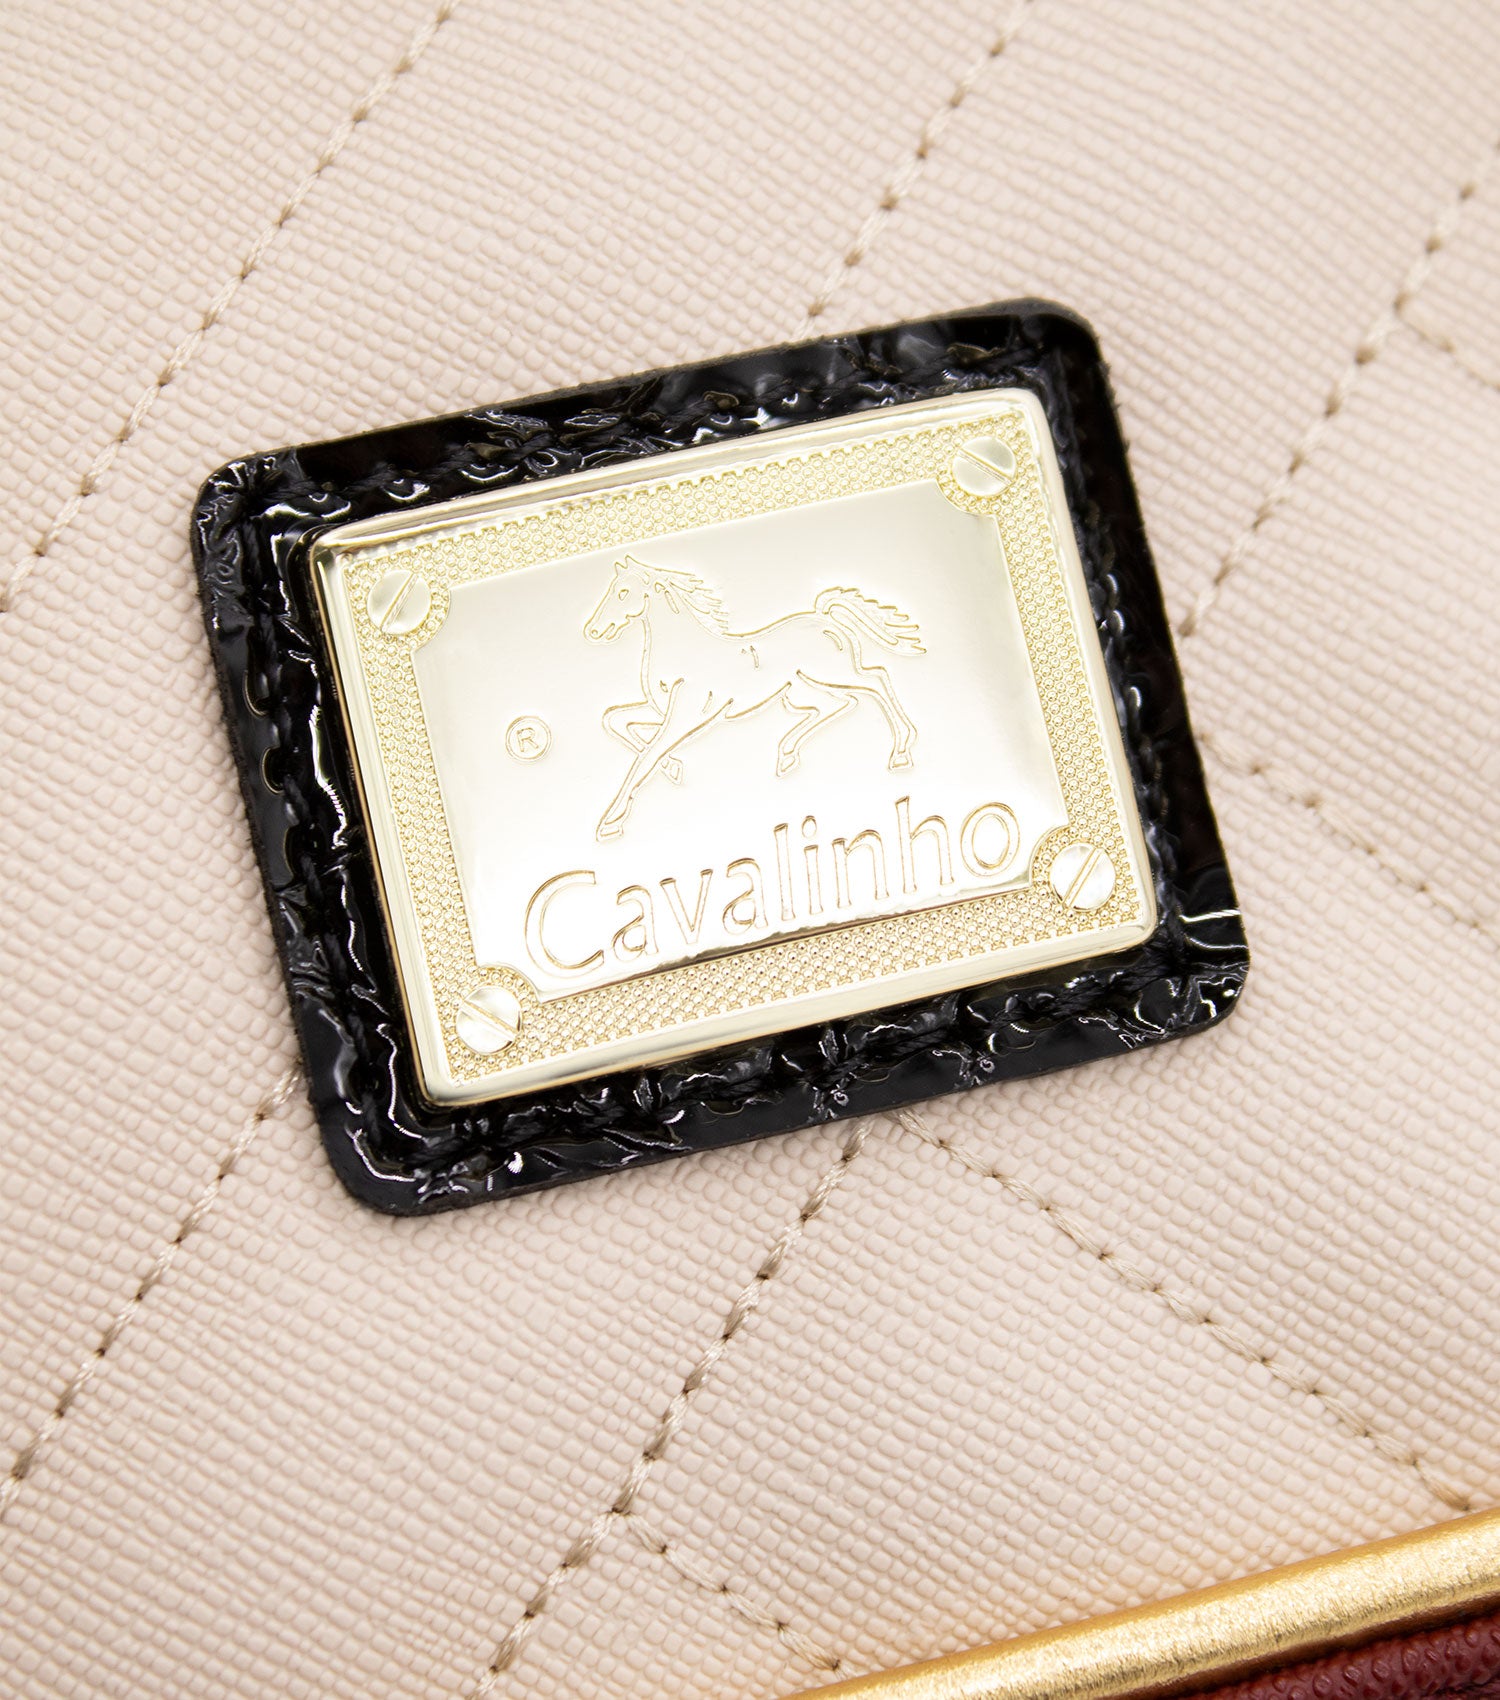 Cavalinho Ciao Bella Mini Handbag - Maroon - 18060243.21_P04